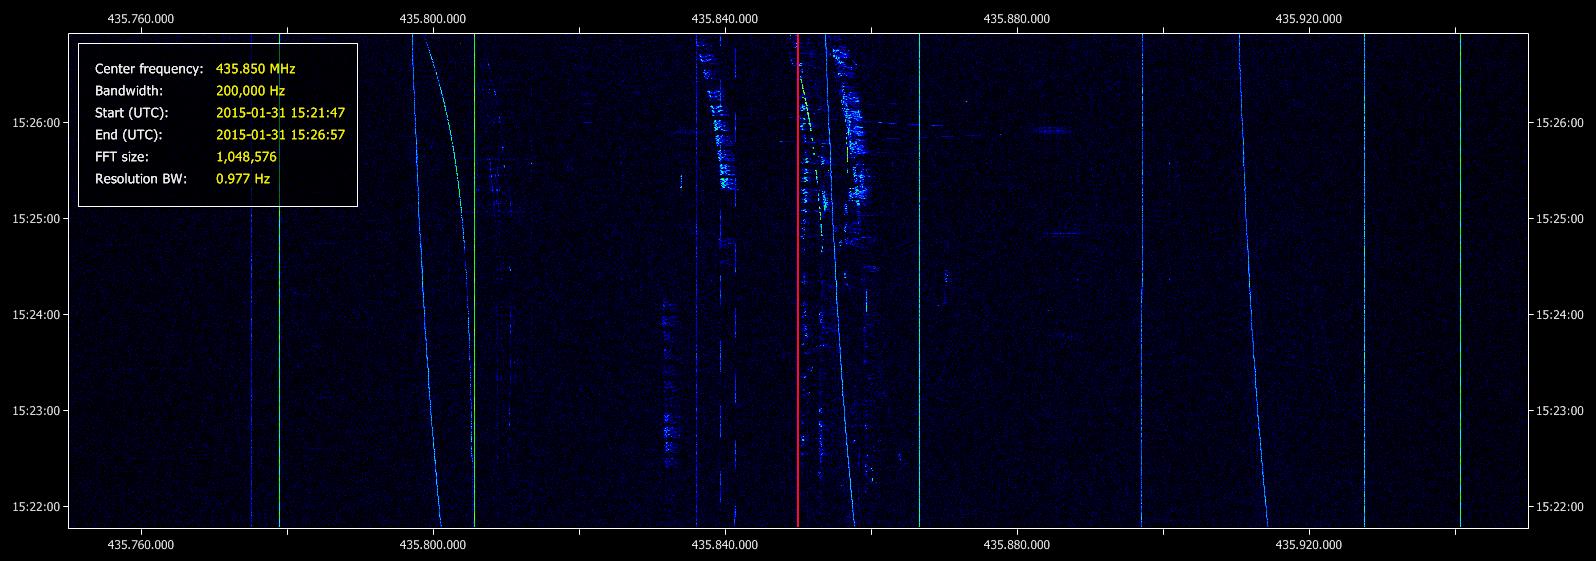 Spektrum des Fuji Oscar 29. Links die Bake, rechts davon Signale des Lineartransponders